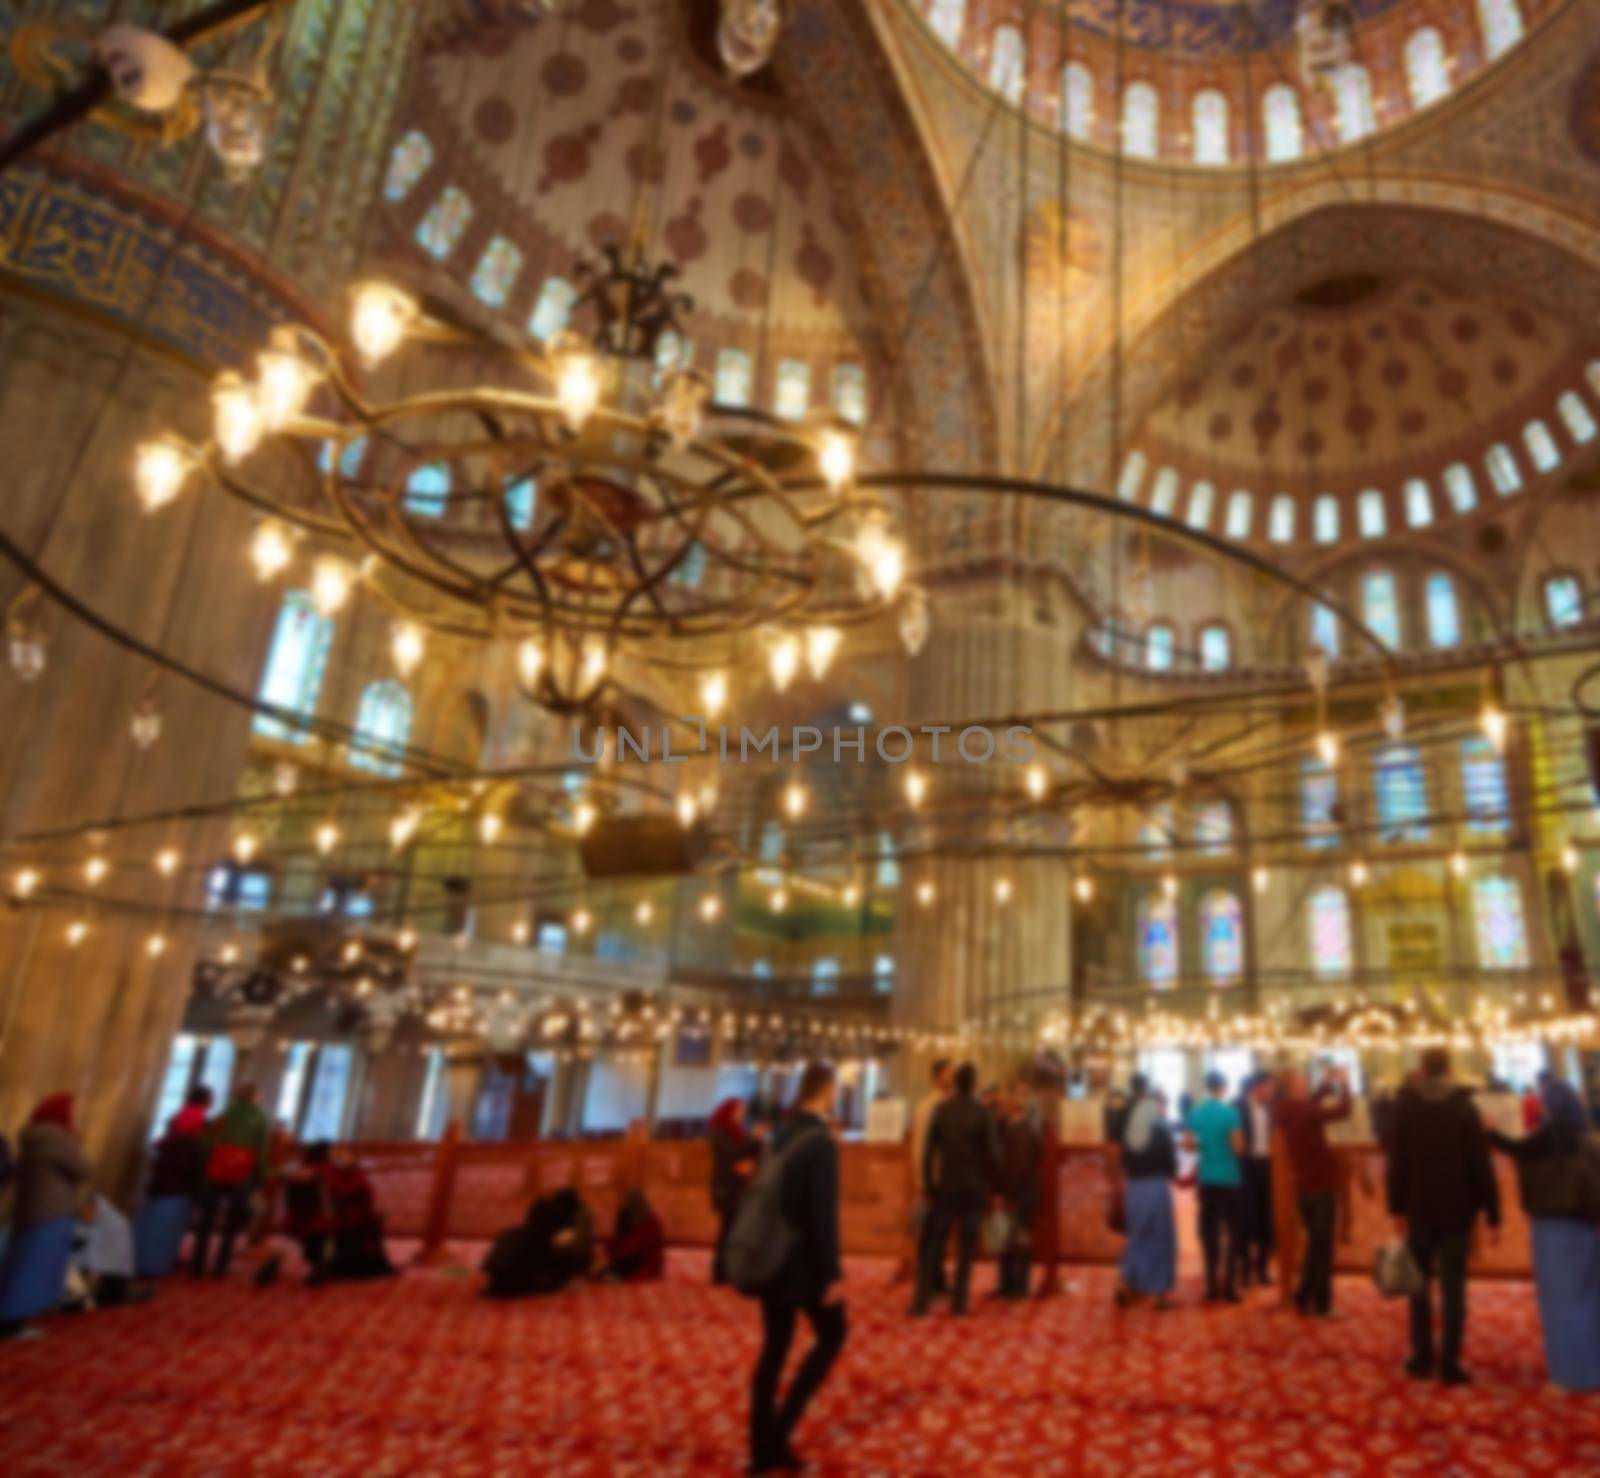 blur image of Muslims praying inside Mosque.